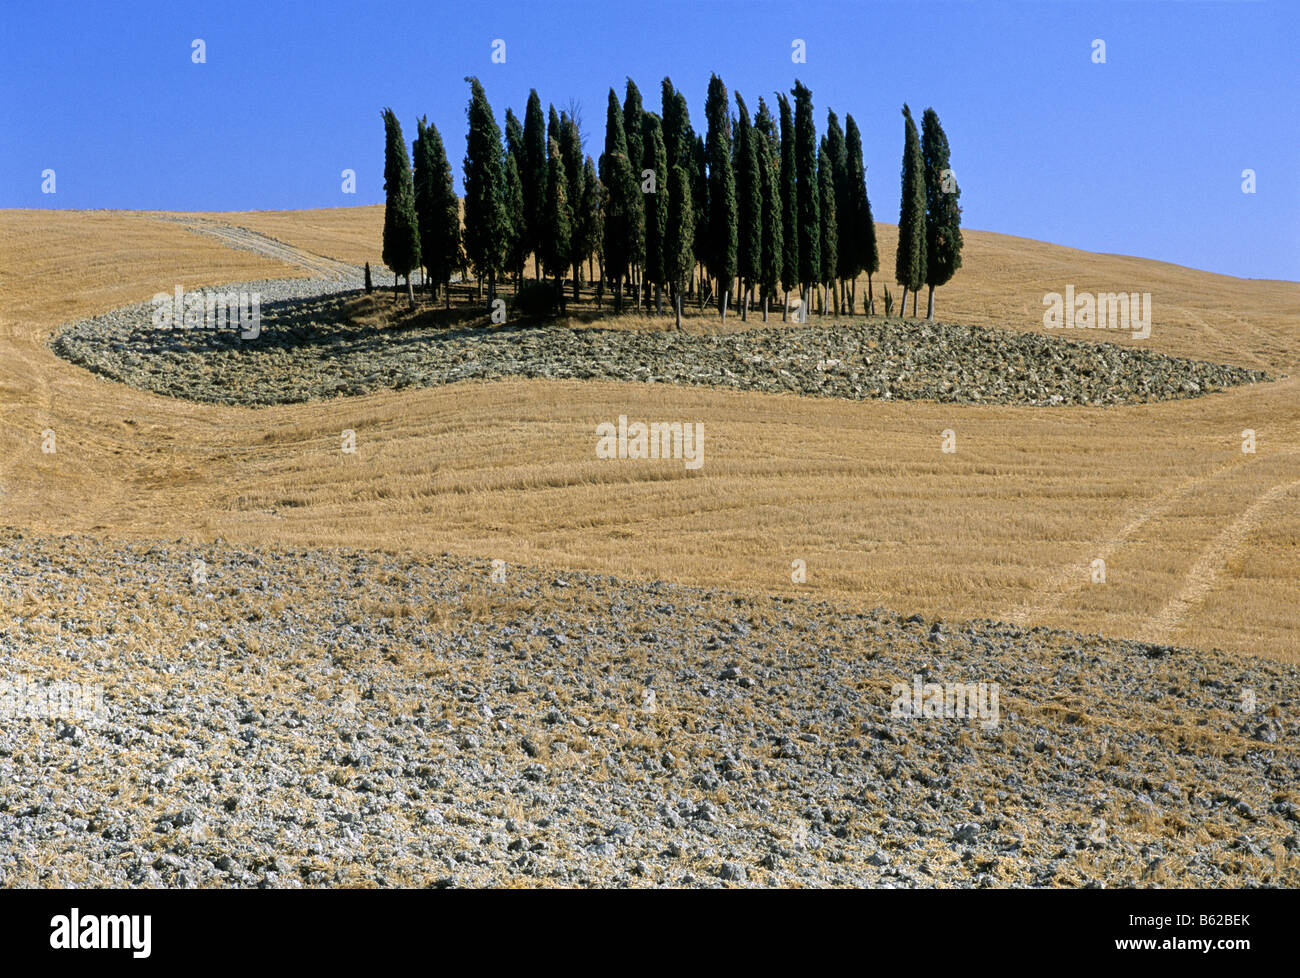 Harvested wheatfields, plowed field, cypress trees, landscape near Montalcino, Siena Province, Tuscany, Italy, Europe Stock Photo